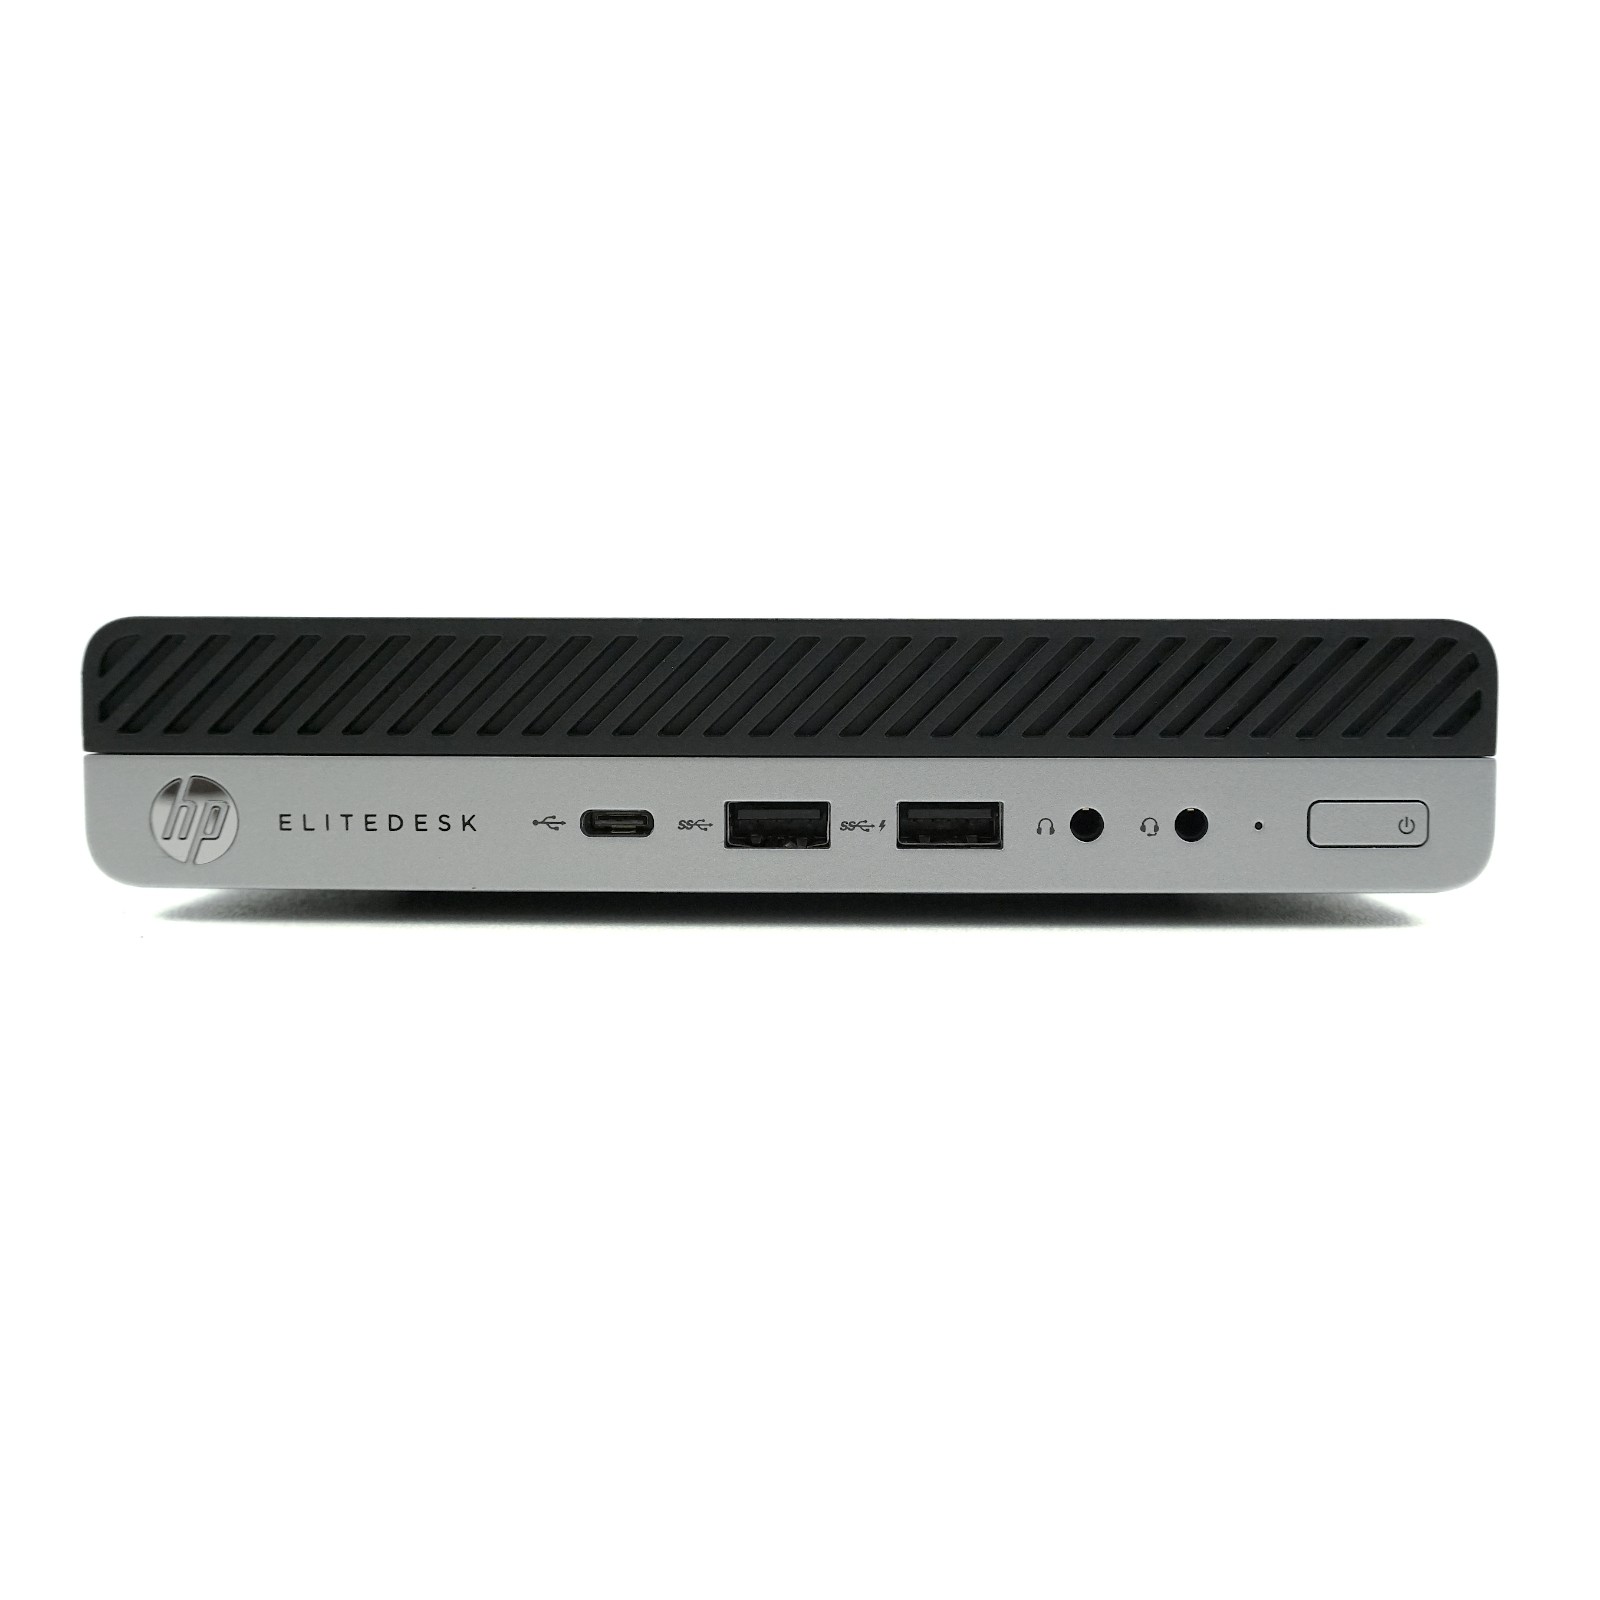 HP EliteDesk 800 G3 Mini Desktop PC | Configure To Order